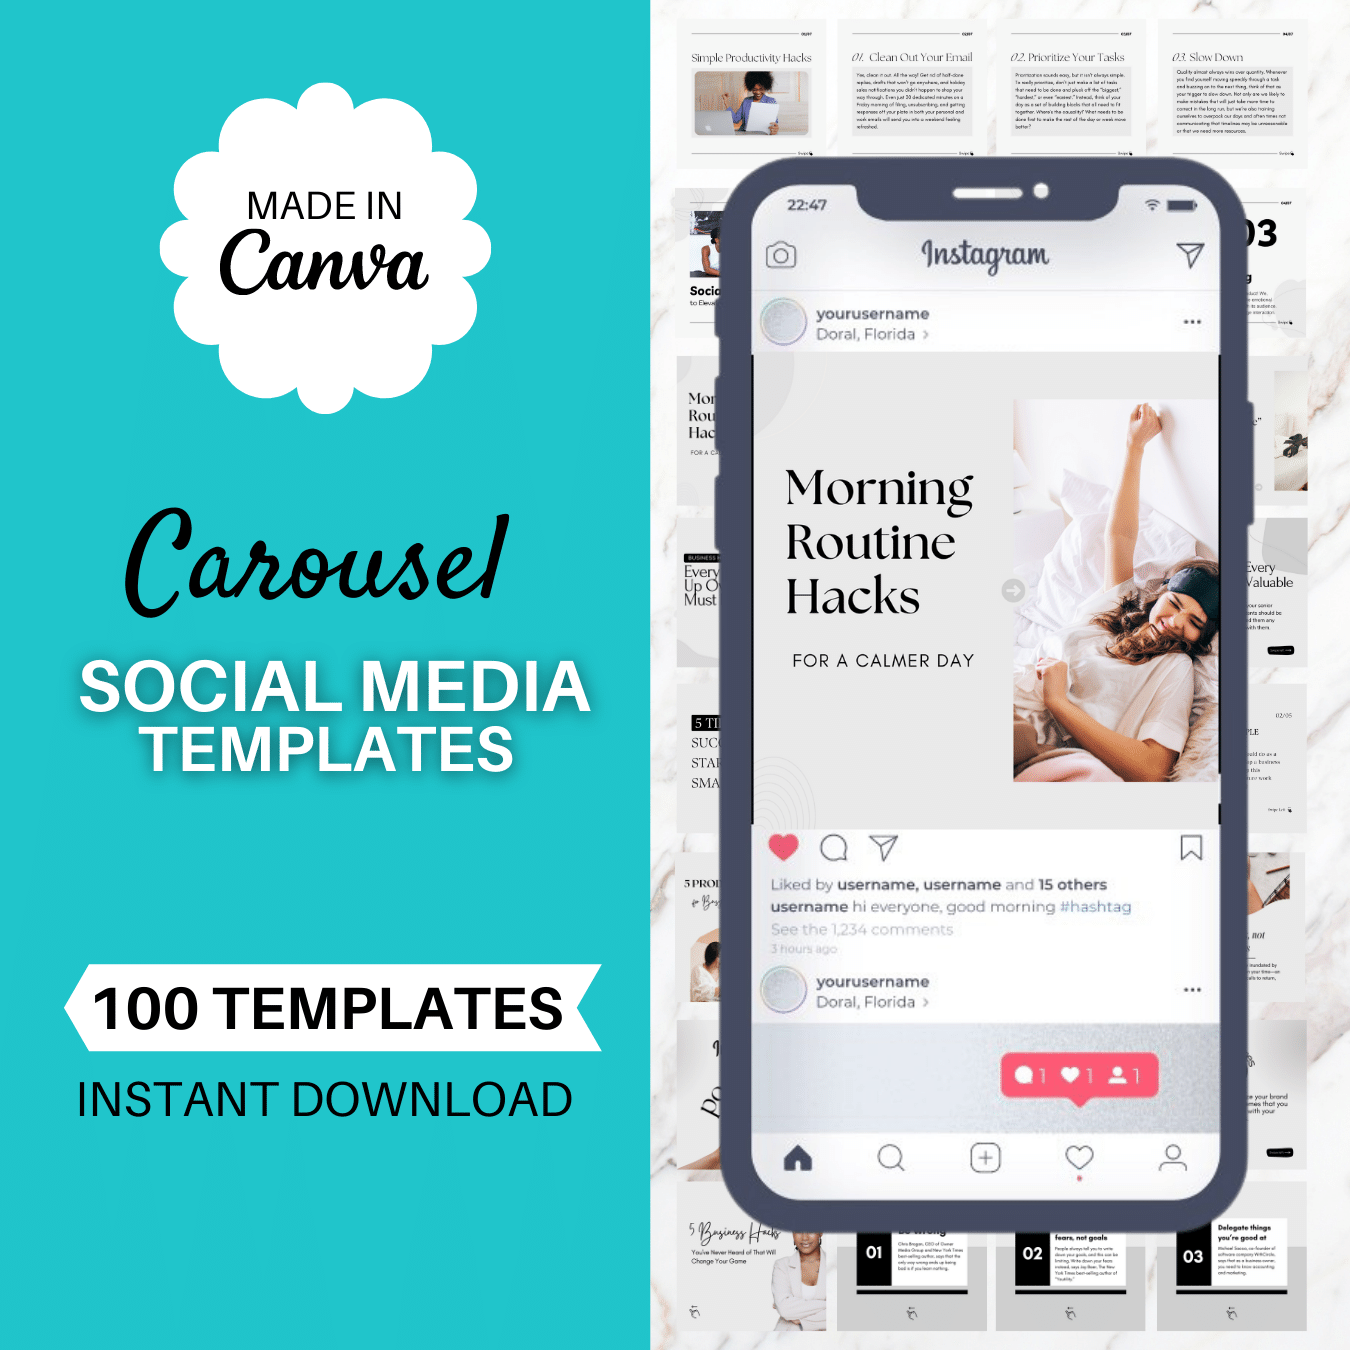 Carousel Social Media Templates - 100